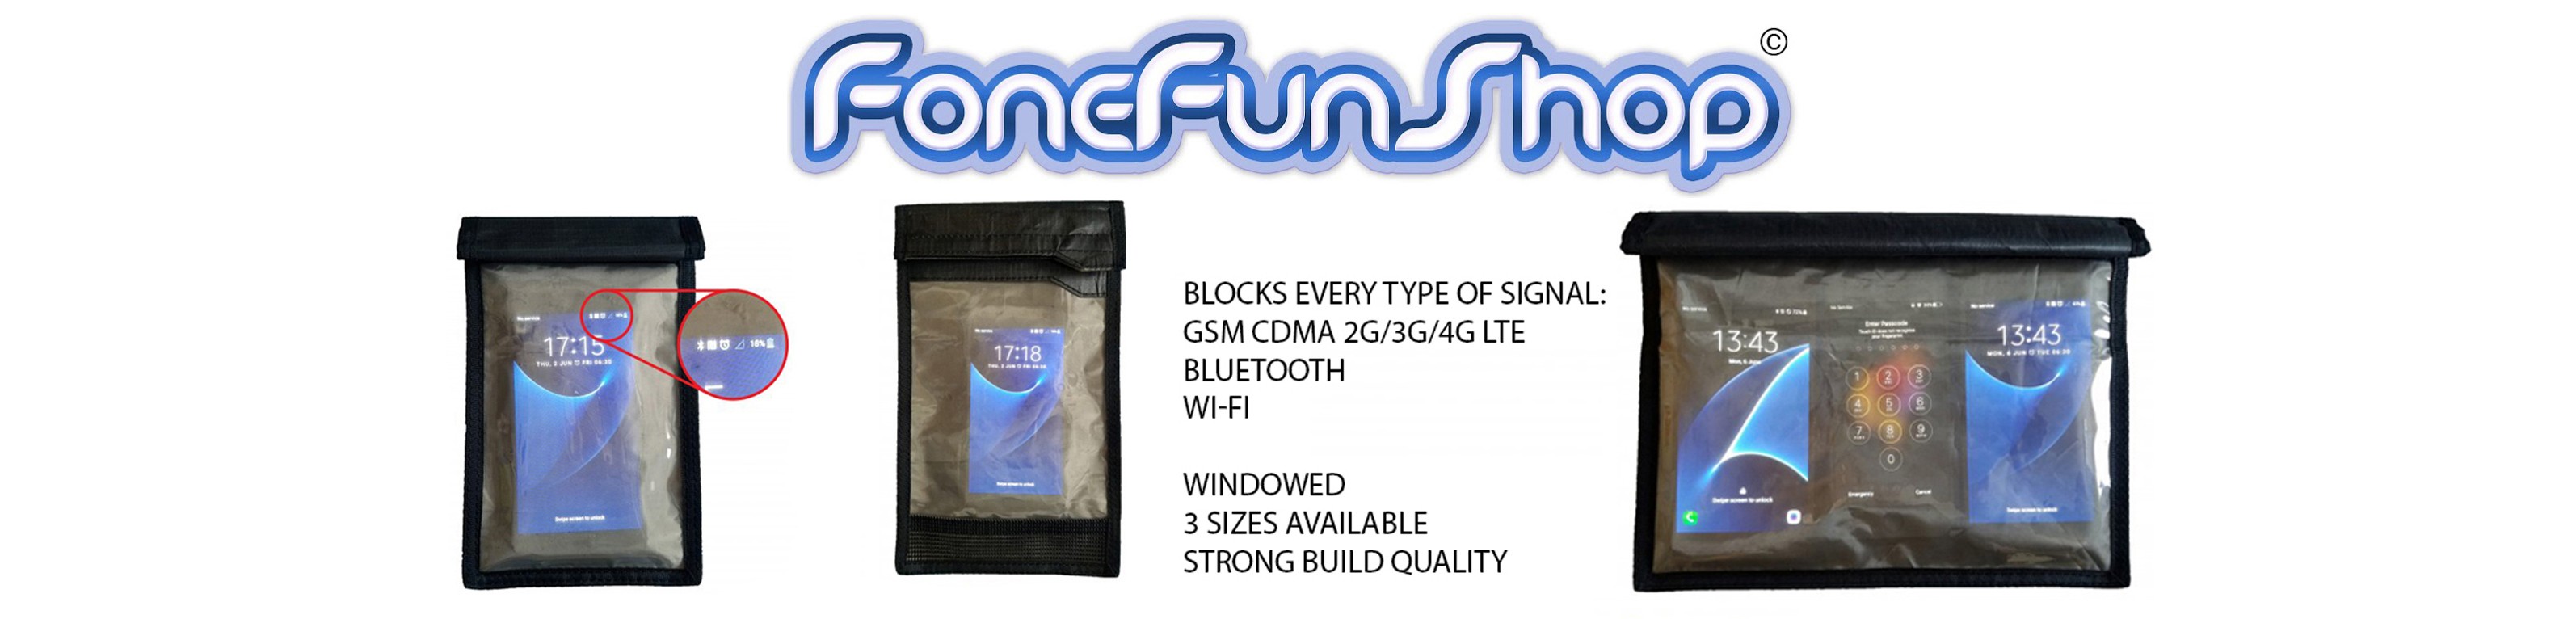 FoneFunShop Faraday Bags